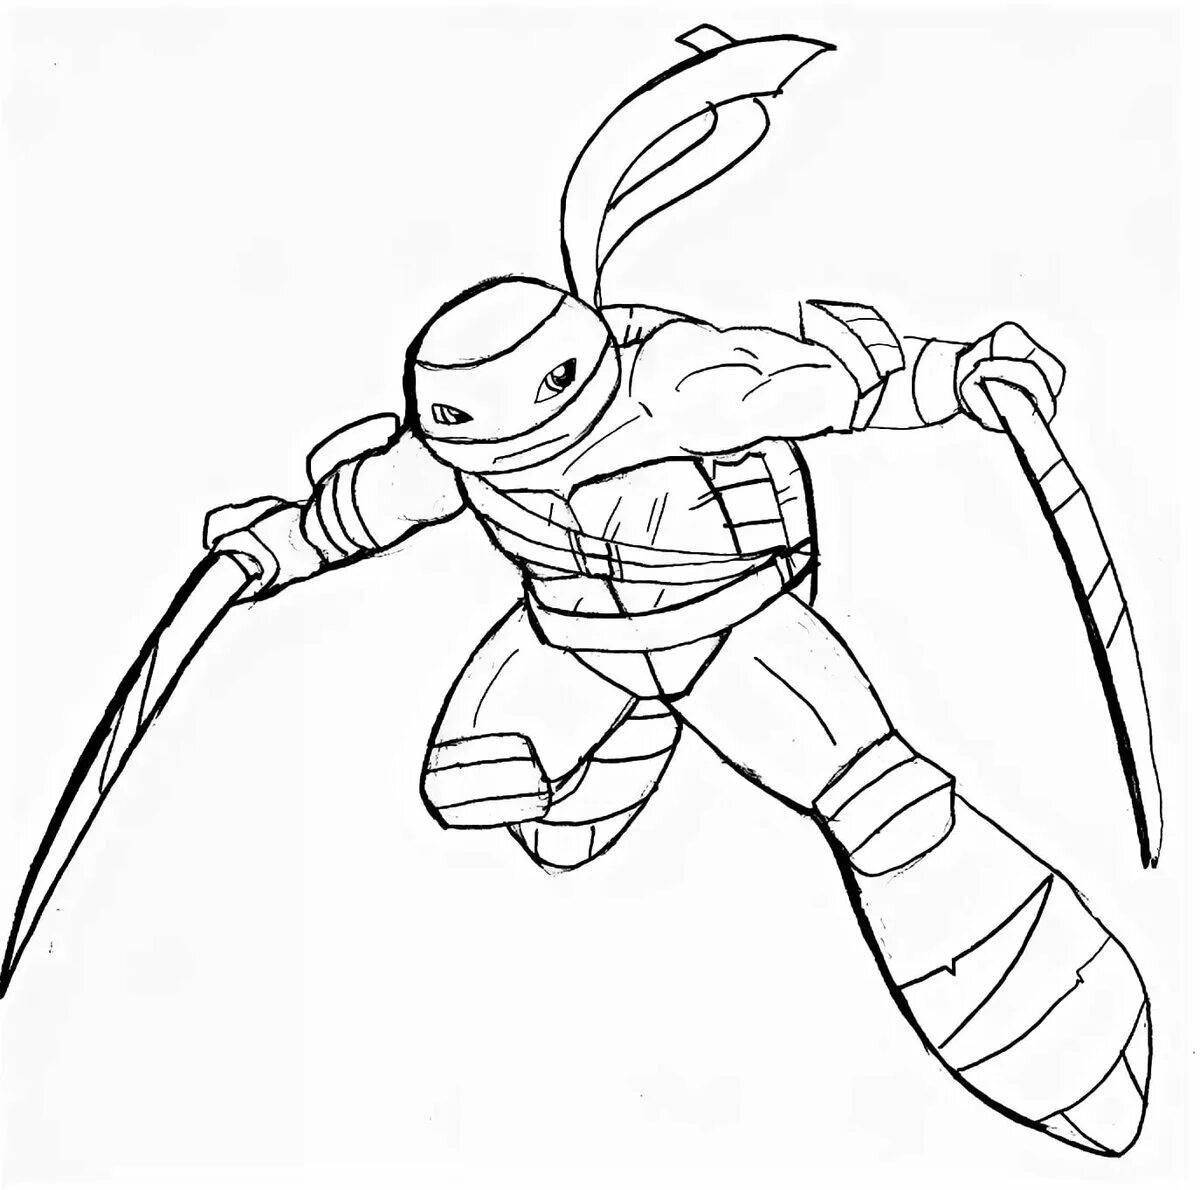 Teenage Mutant Ninja Turtles 2012 coloring book